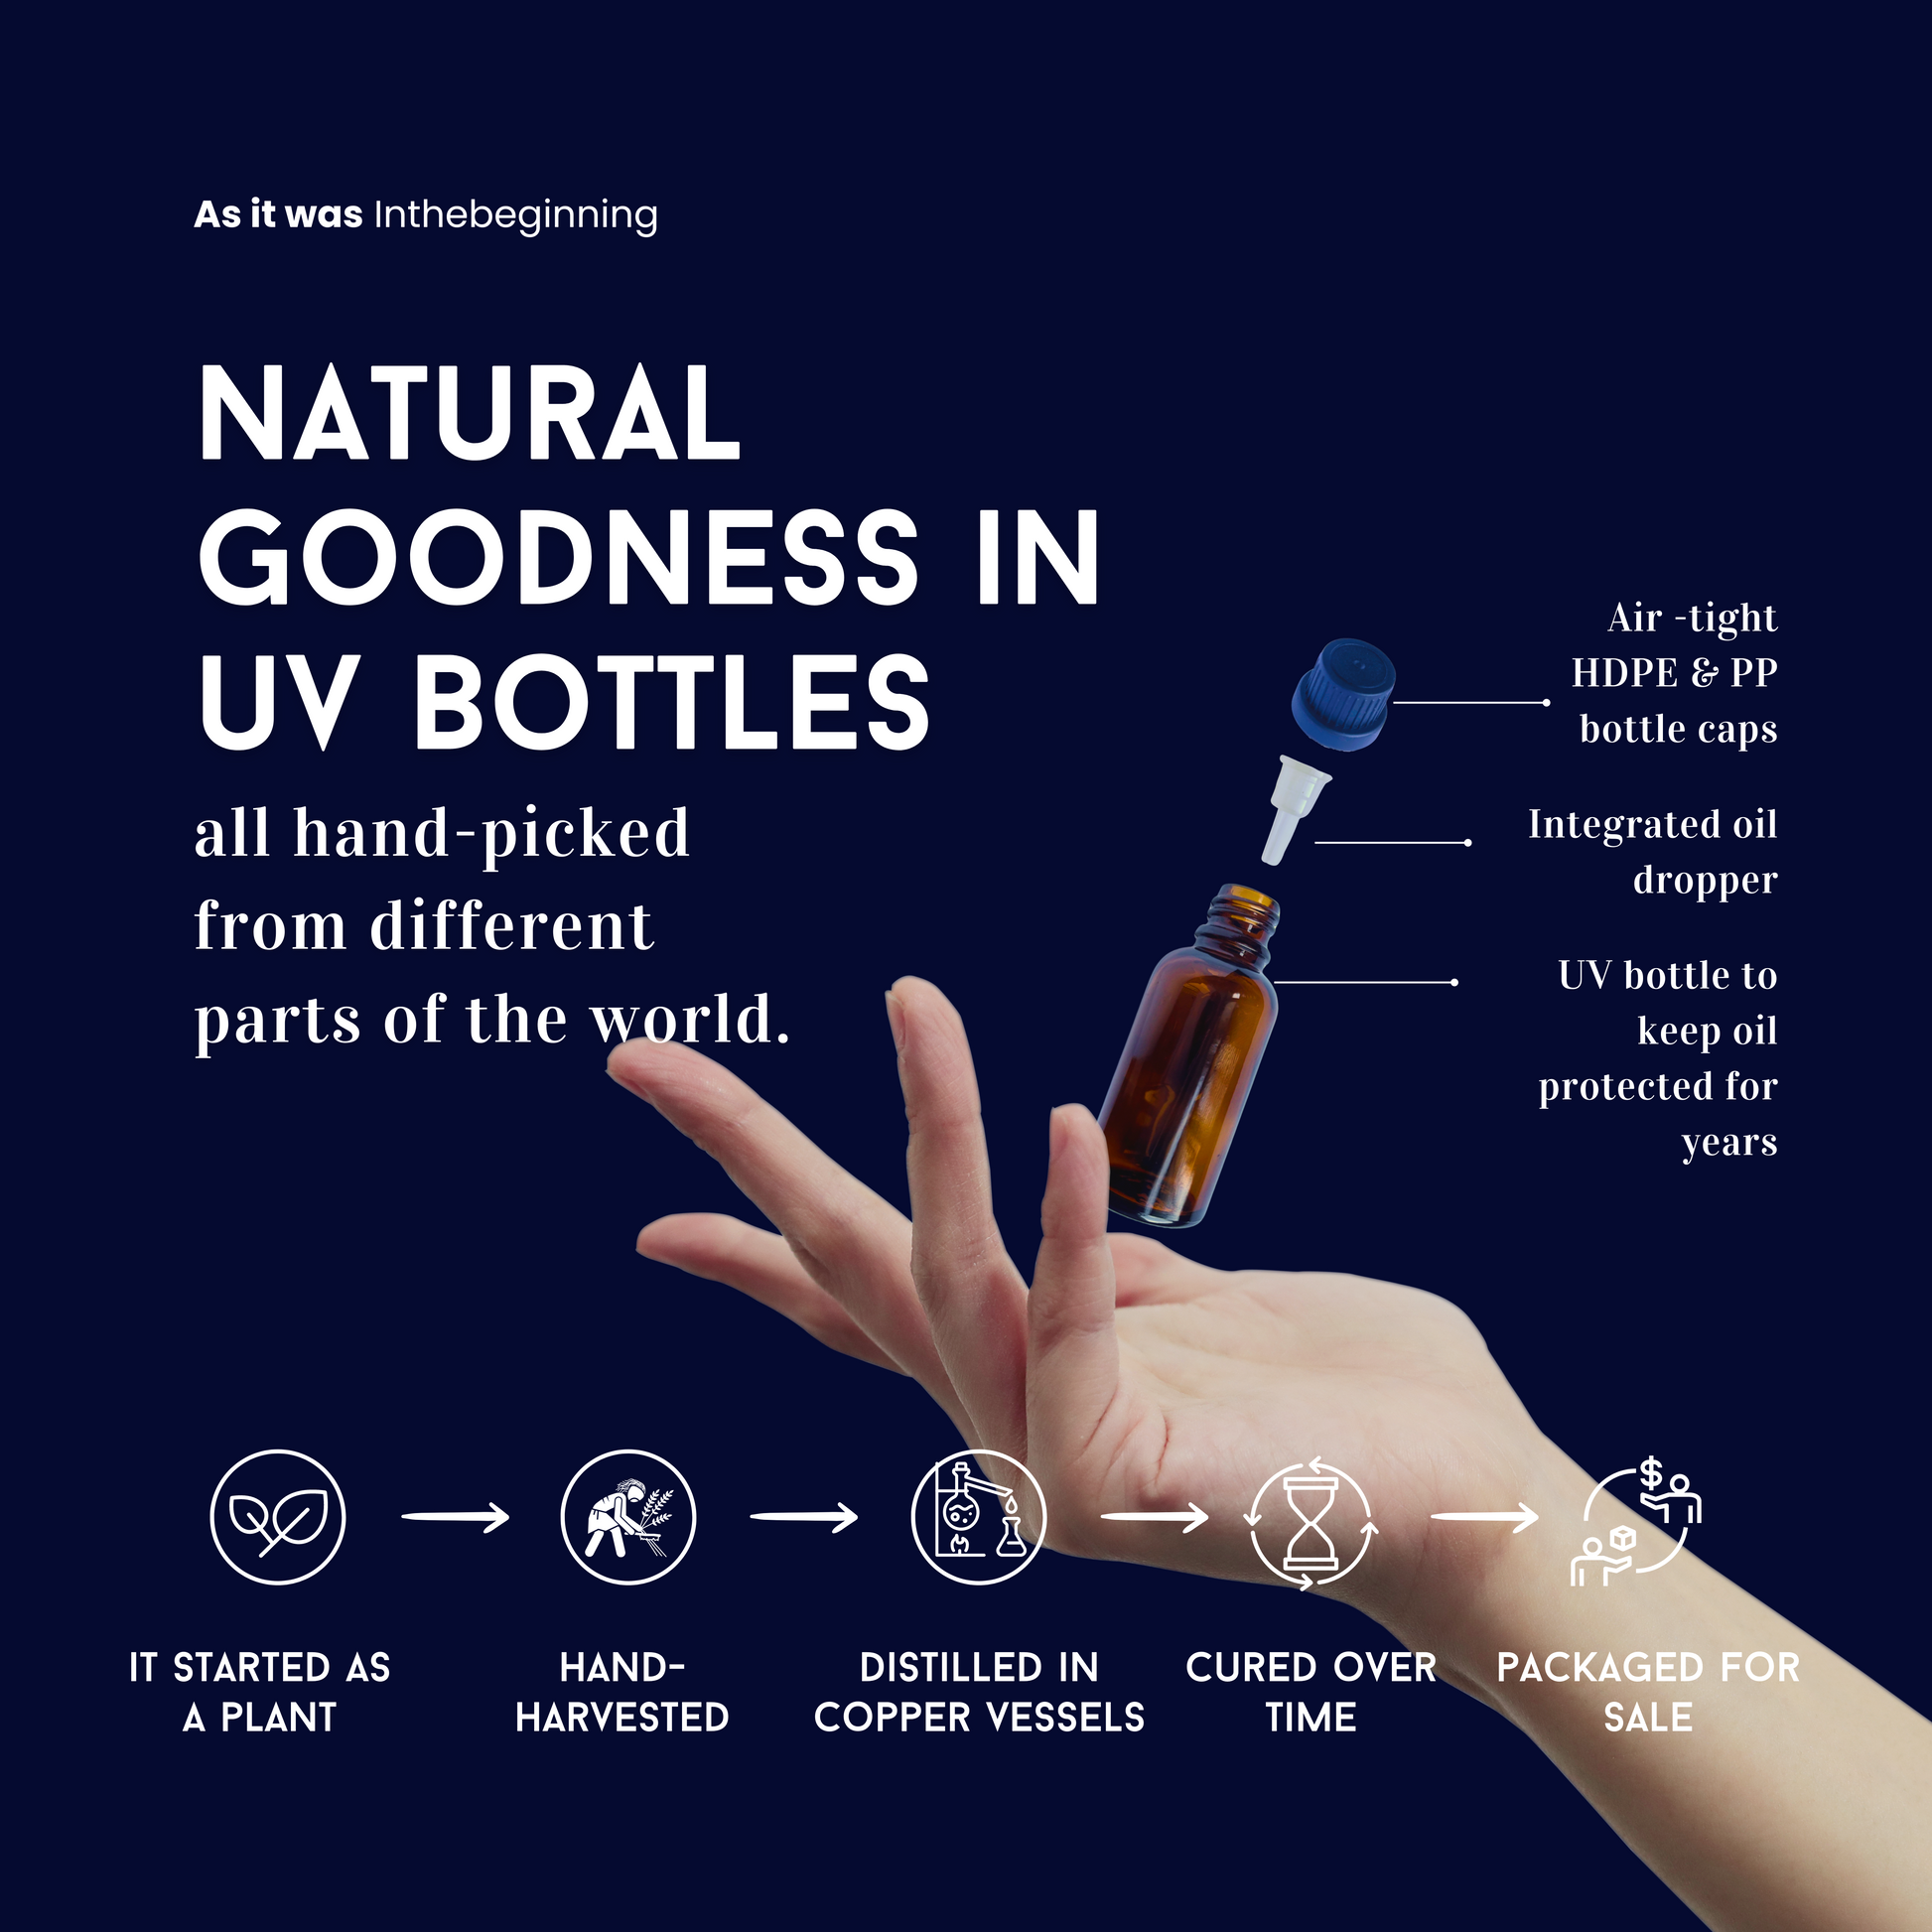 Organic Blue Tansy Essential Oil | 30ml / 1oz UV Bottle | Unblended | Aromatherapy | Vegan | Spirituality| Nature Heals - ITBO Green